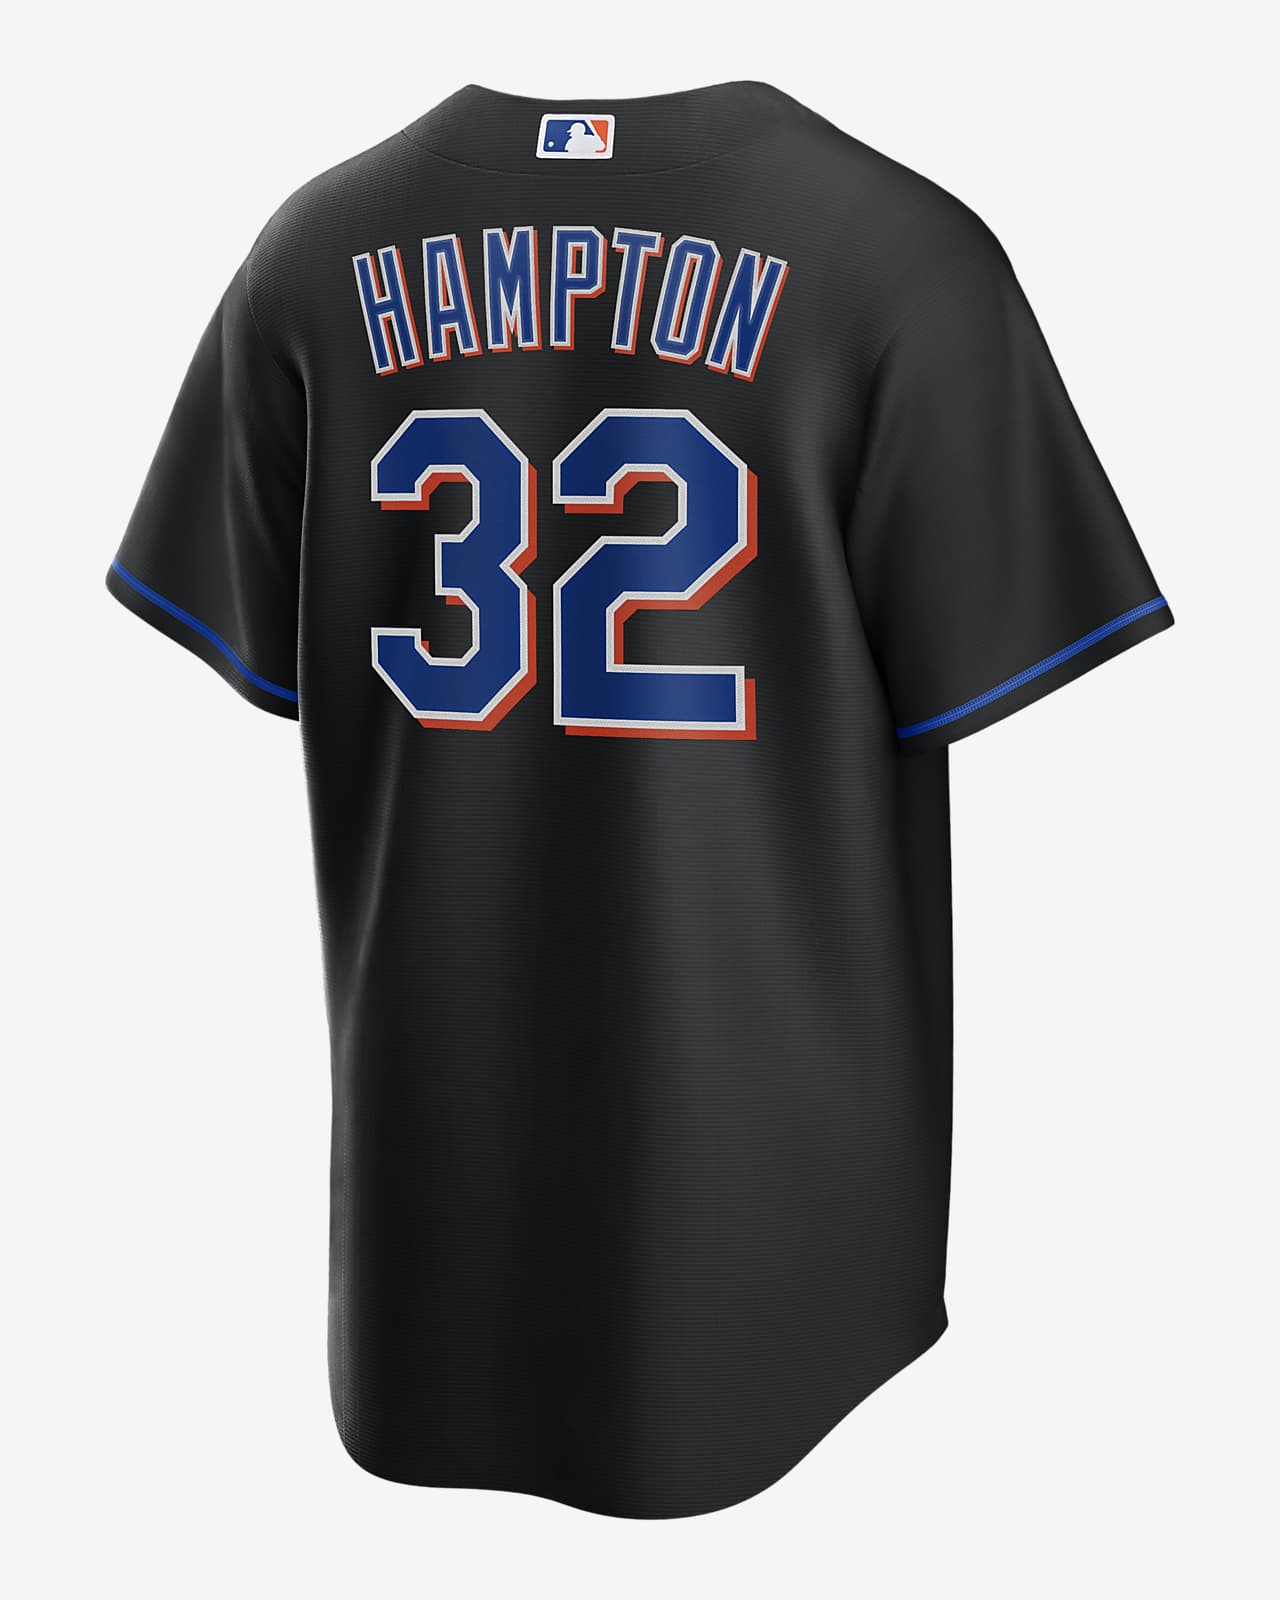 MLB New York Mets (Mike Hampton) Men's Replica Baseball Jersey.